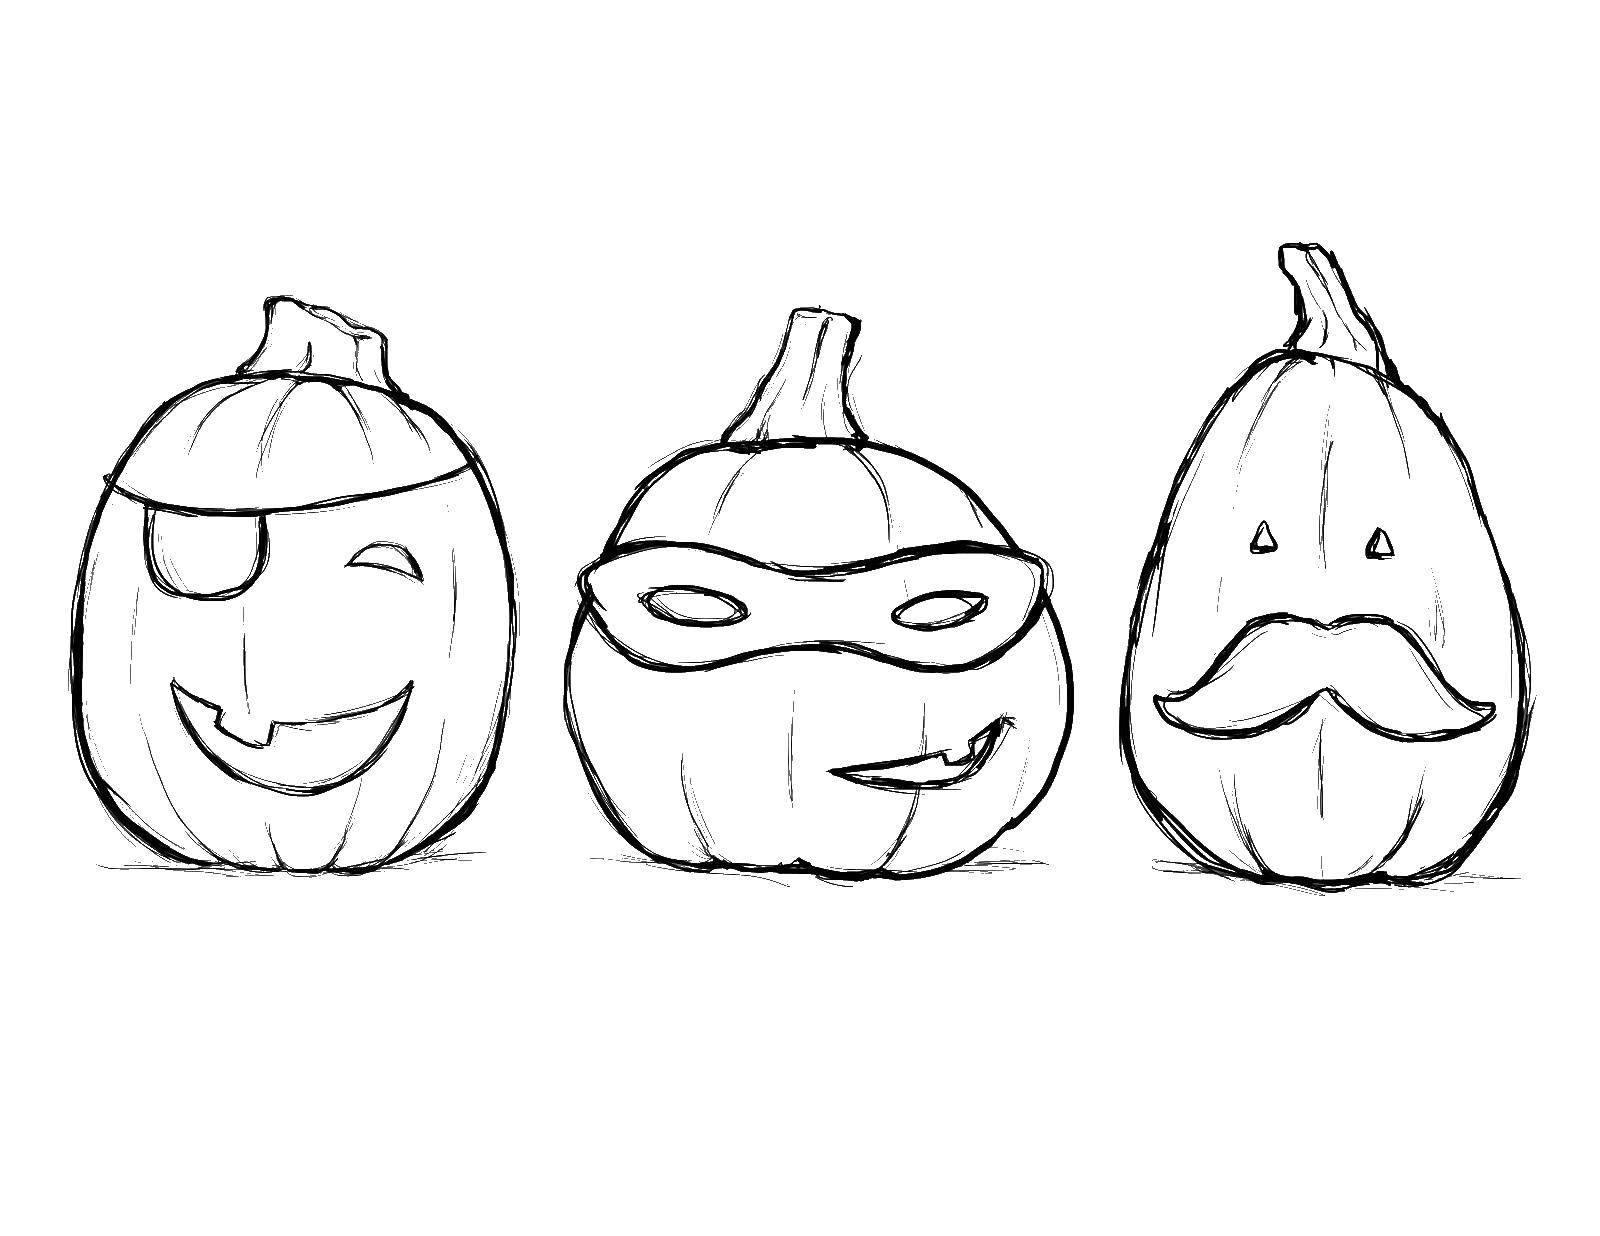 Coloring Pumpkin superheroes. Category Halloween. Tags:  pumpkin, Halloween.